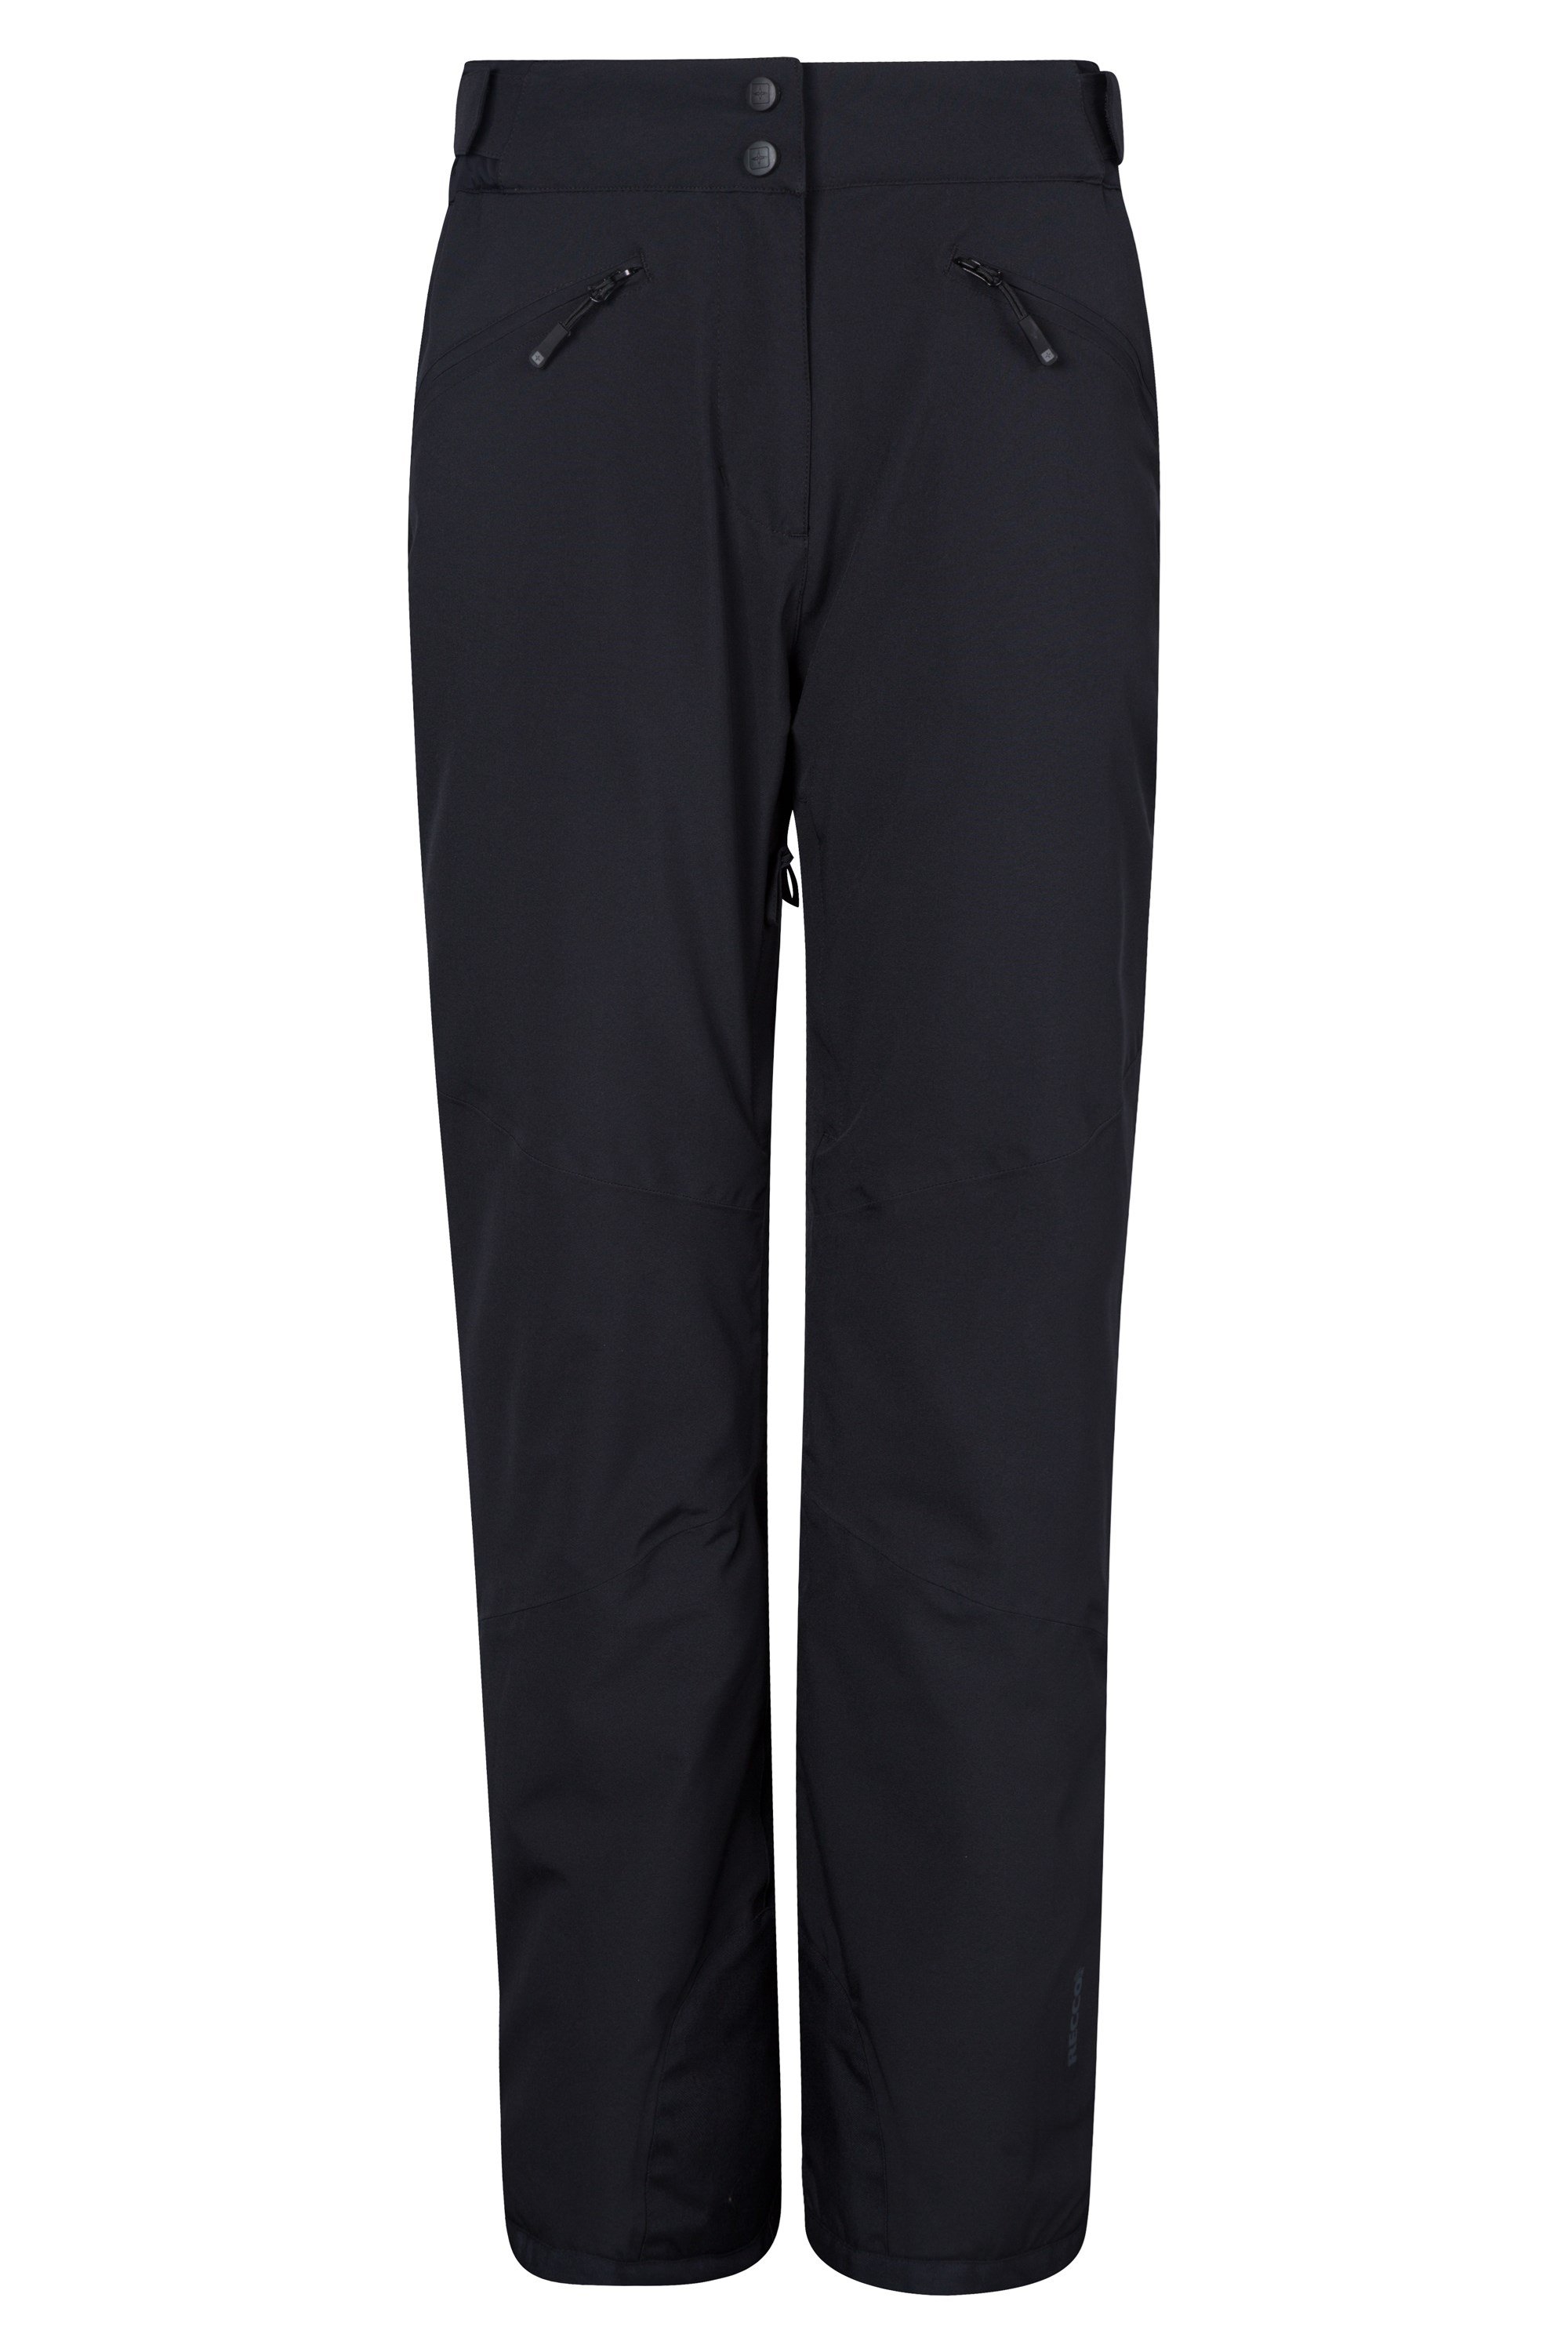 Isola Womens Extreme Recco Ski Pants - Short Length - Black